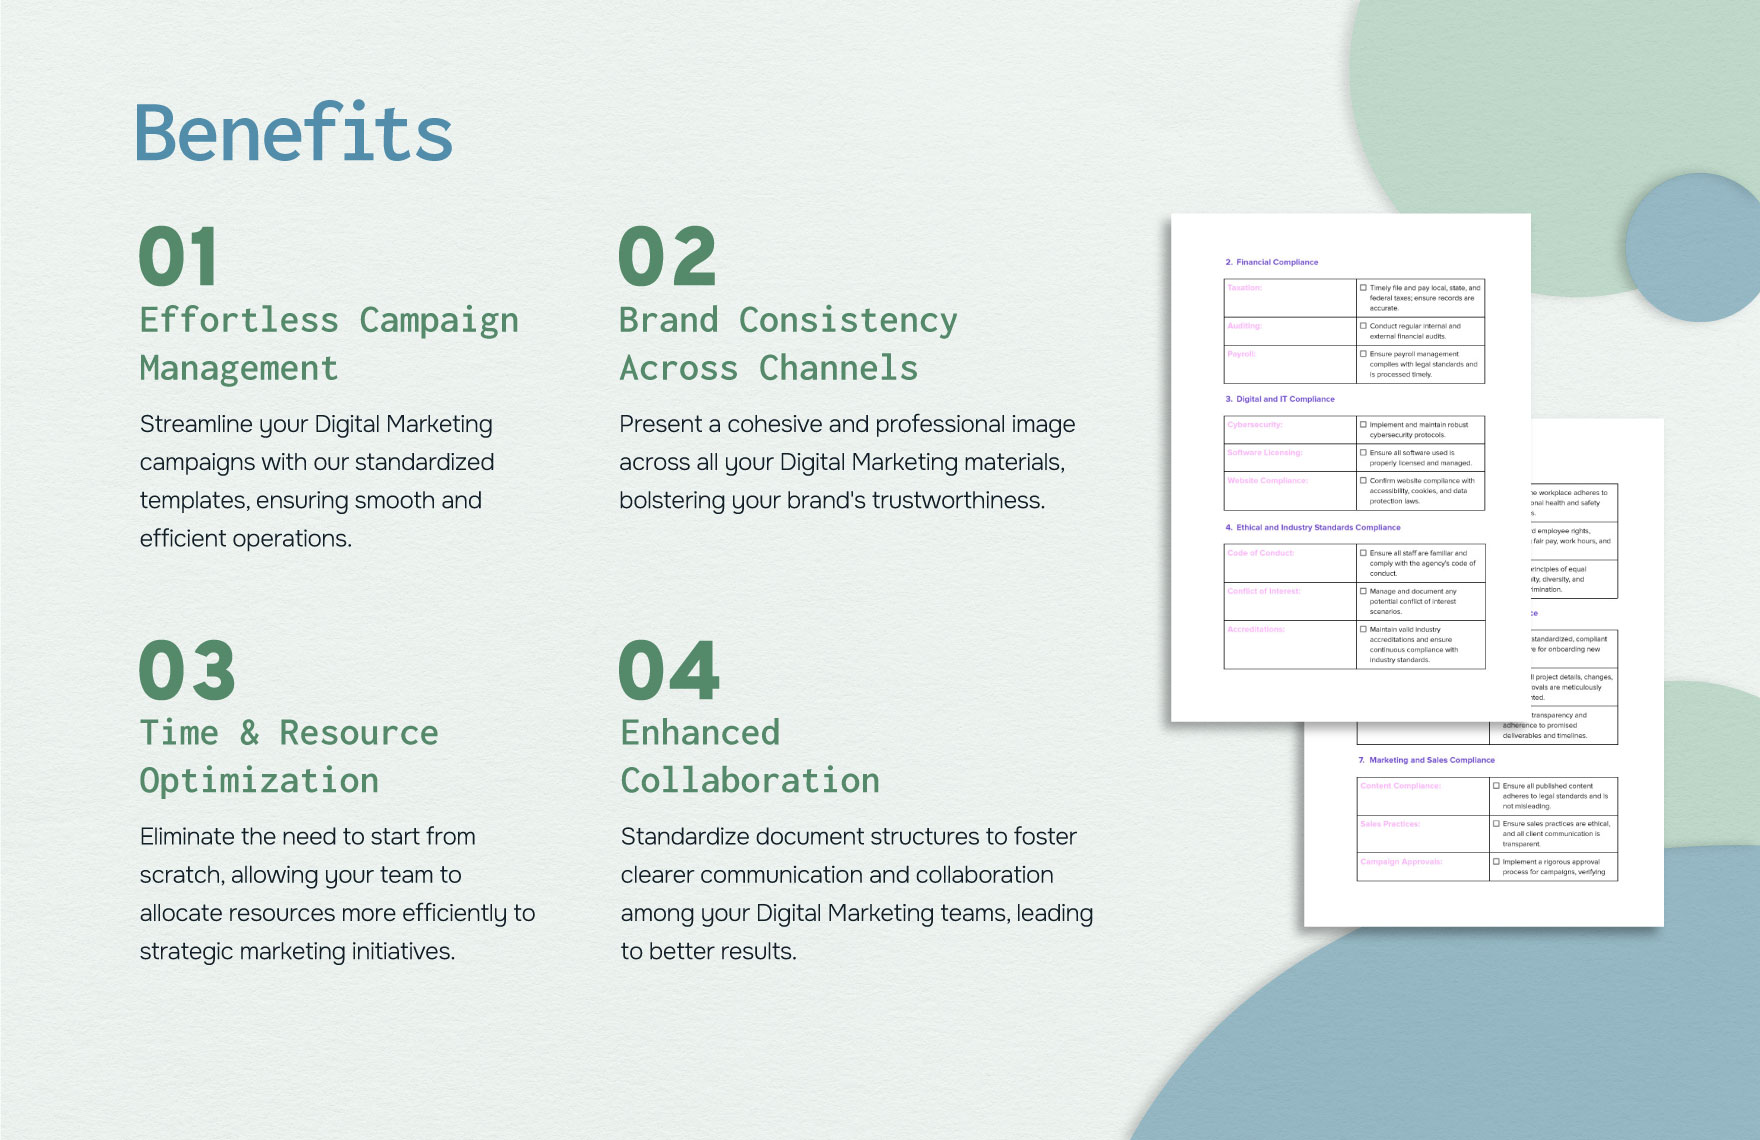 Digital Marketing Agency Business Compliance Checklist Template